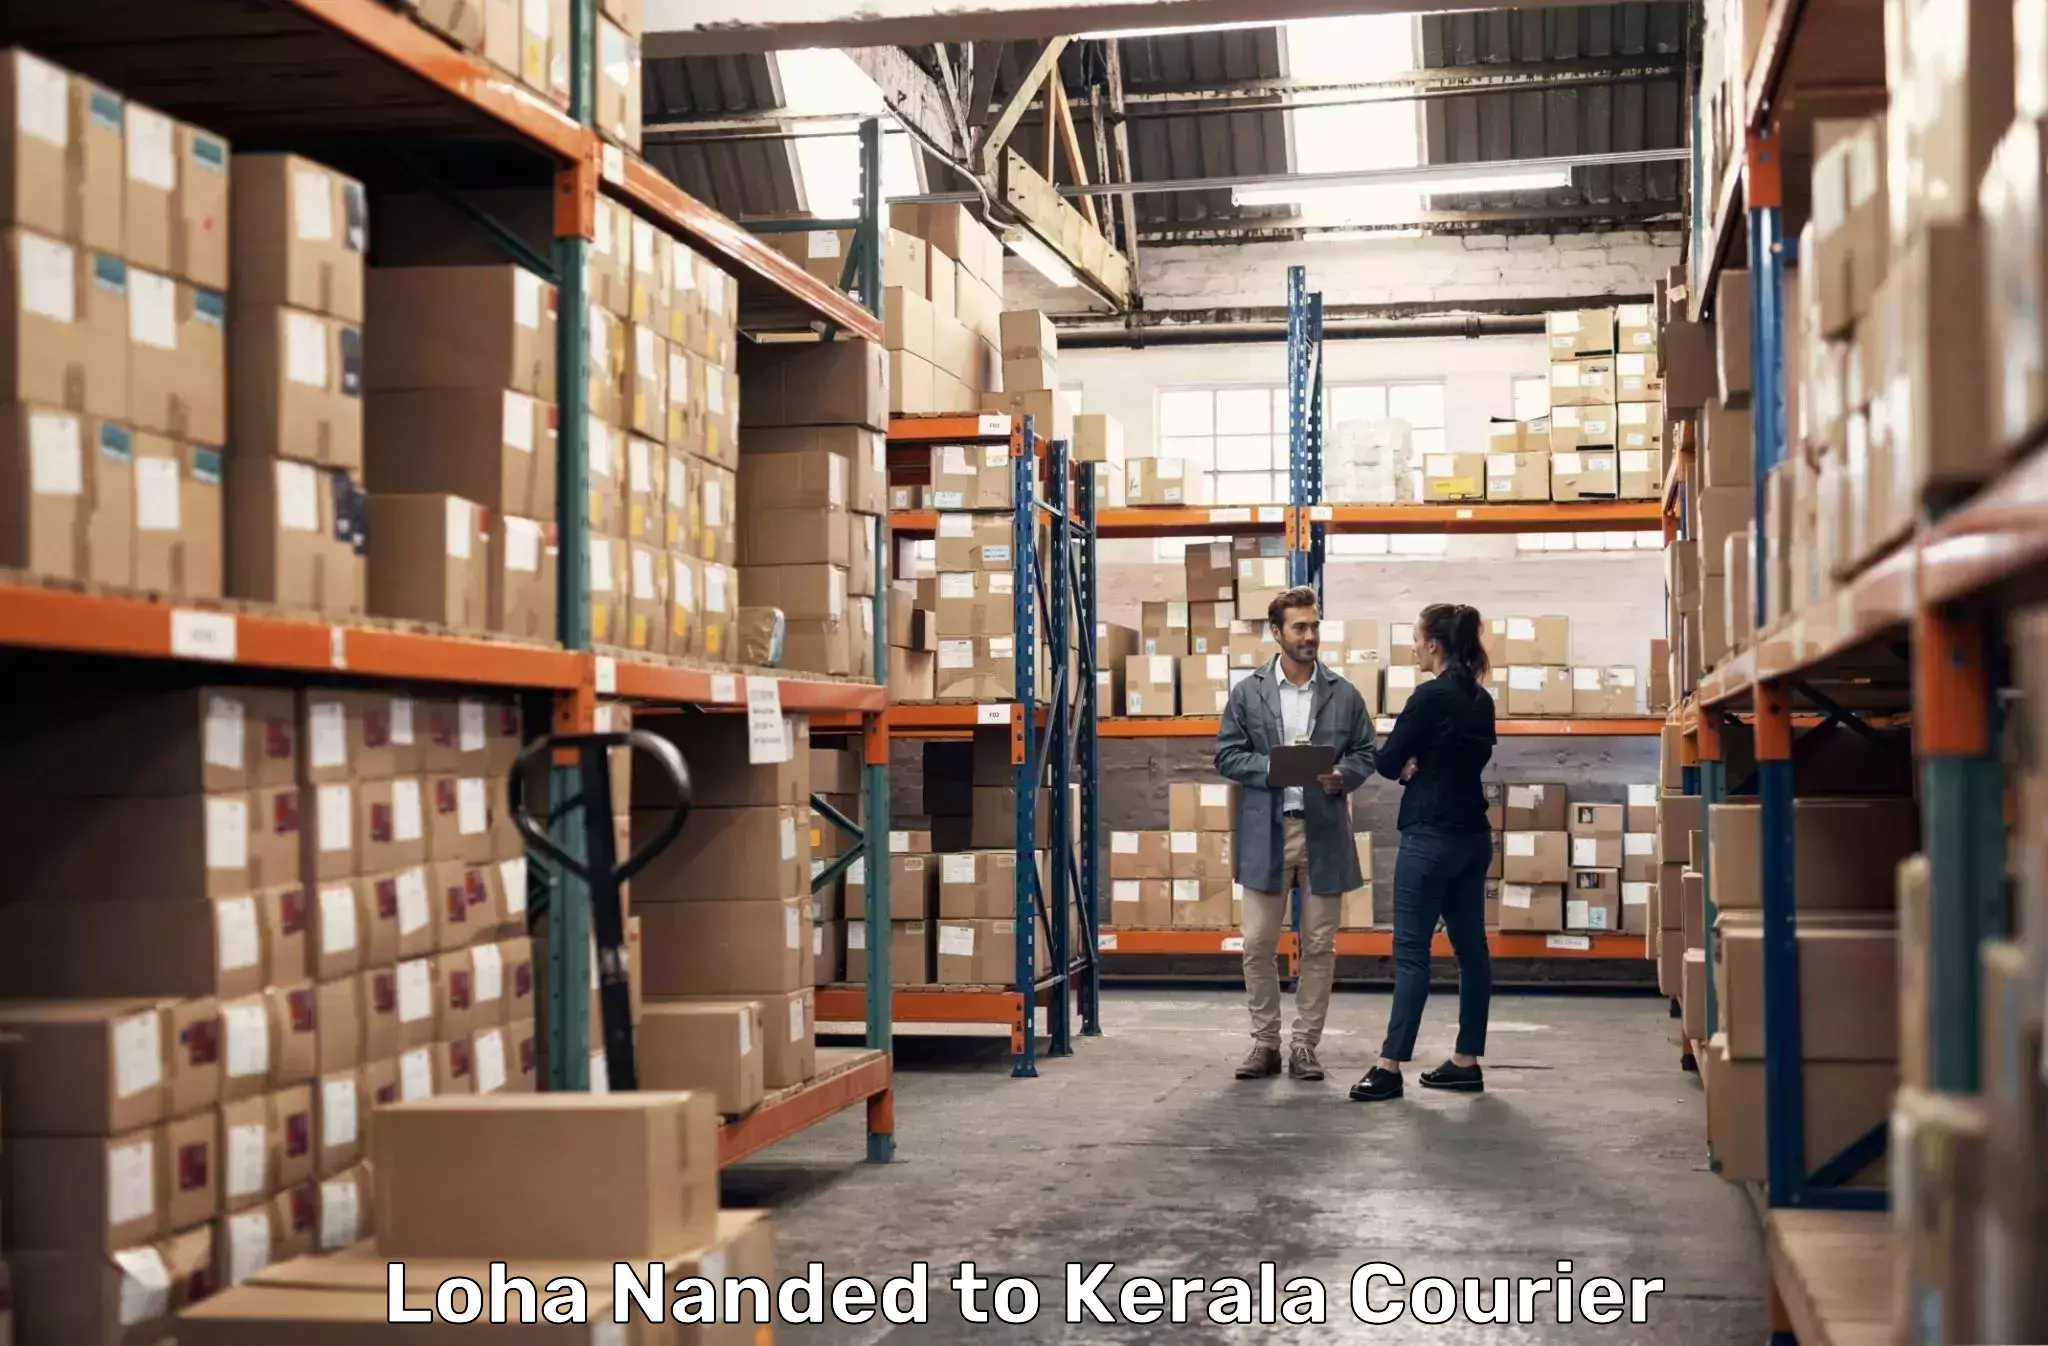 Global logistics network Loha Nanded to Kerala